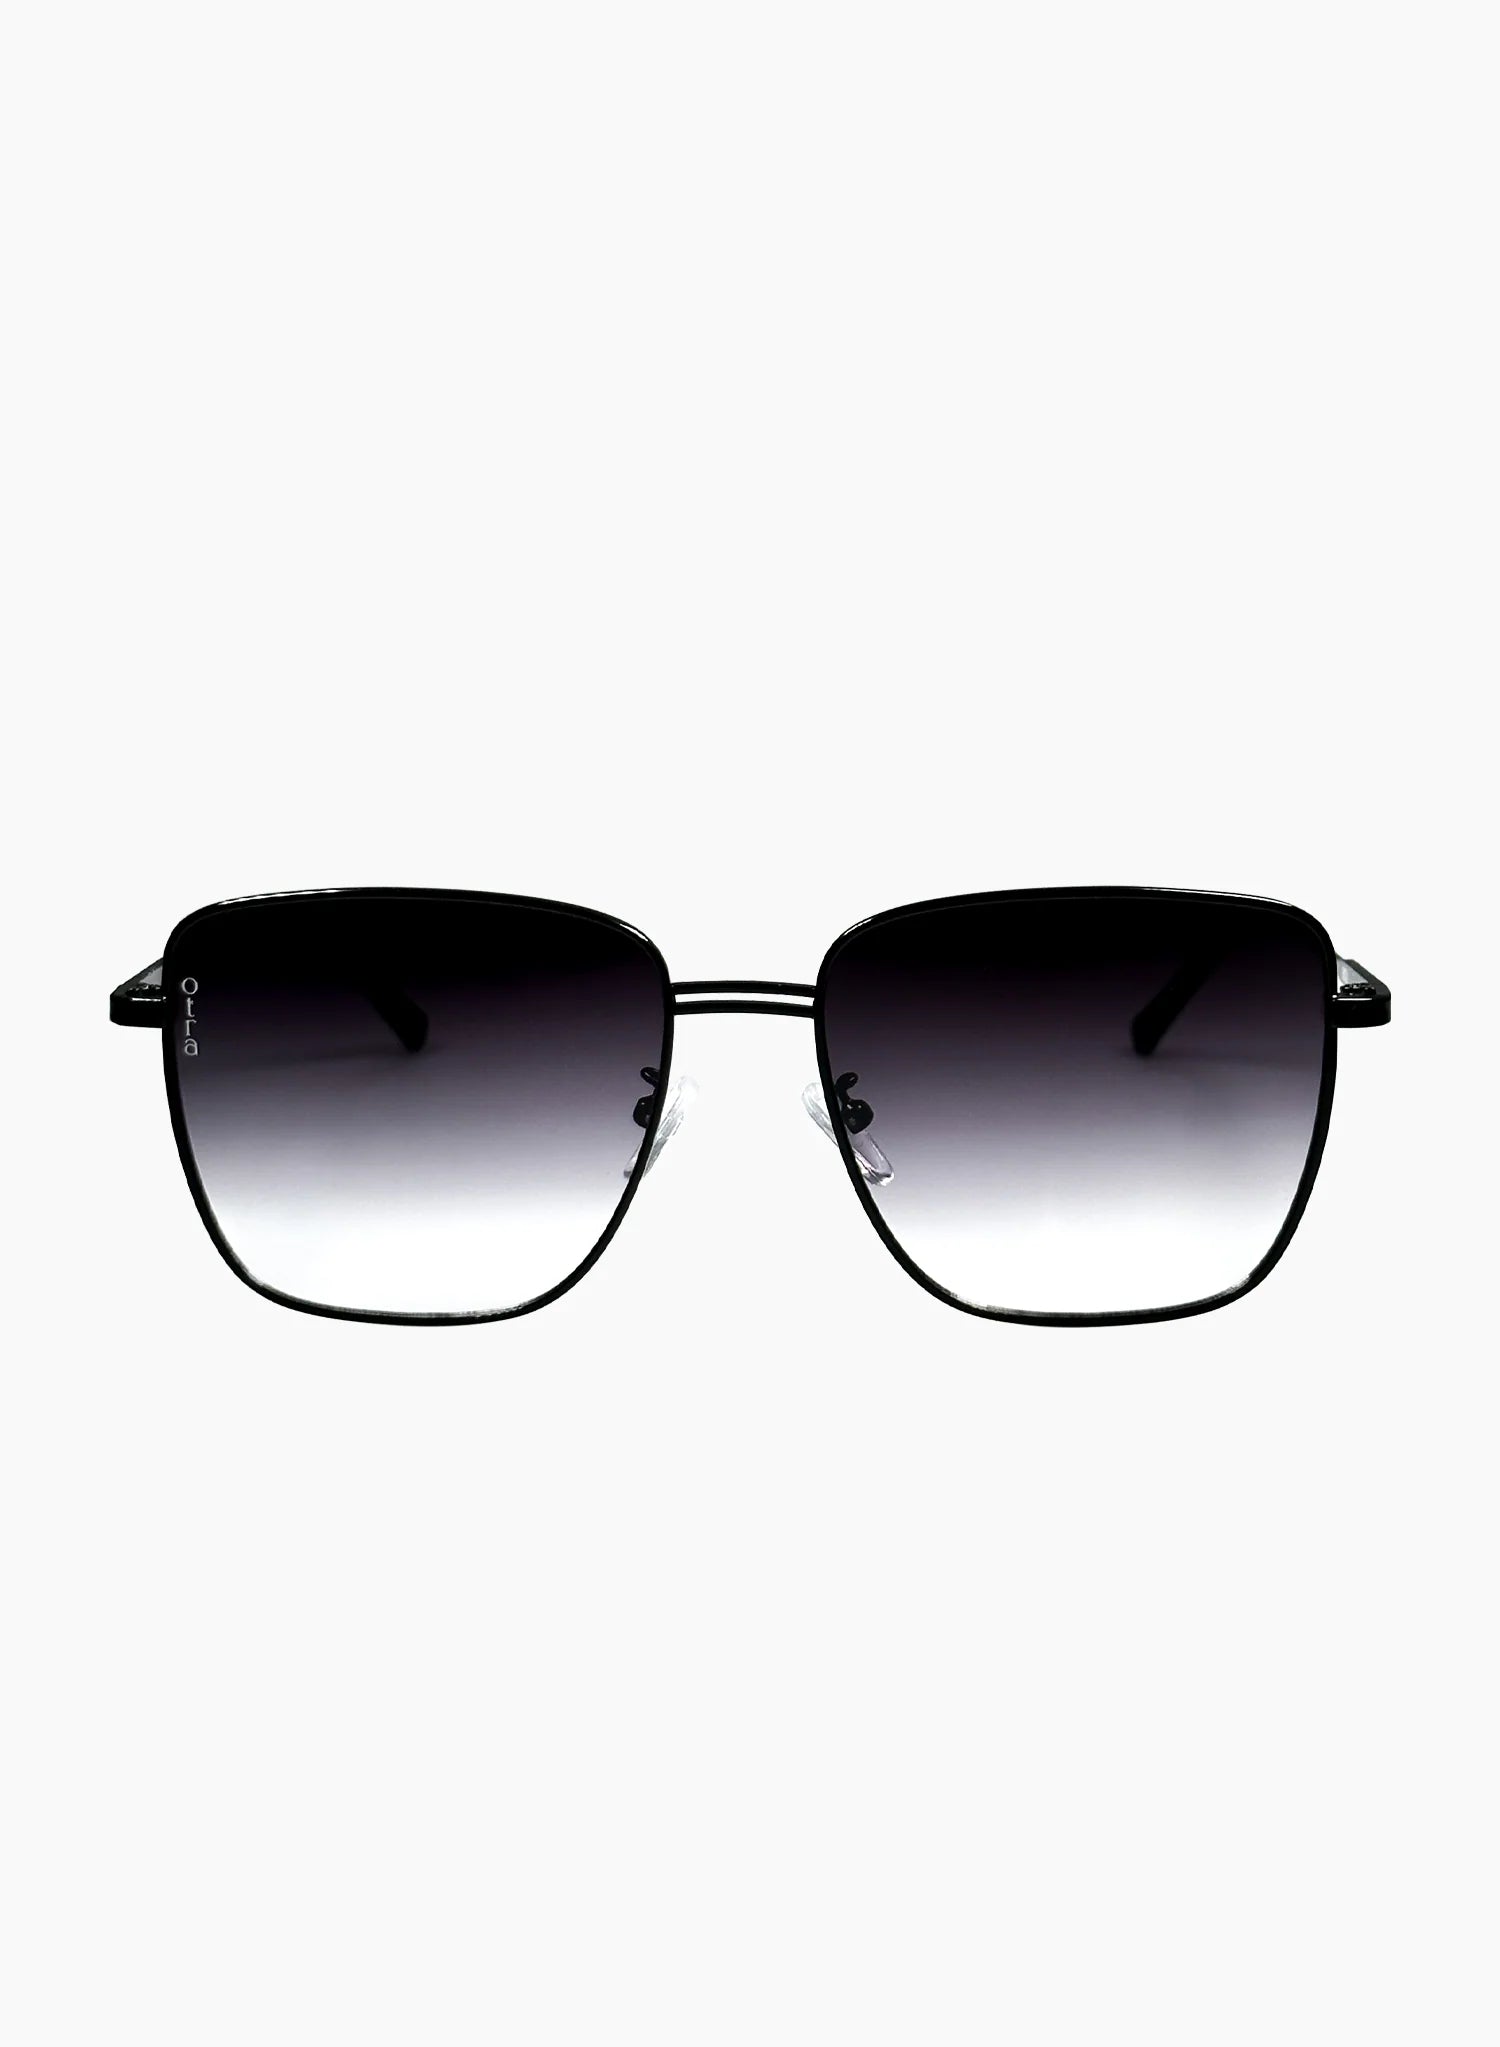 Rita Sunglasses Black Smoke Fade